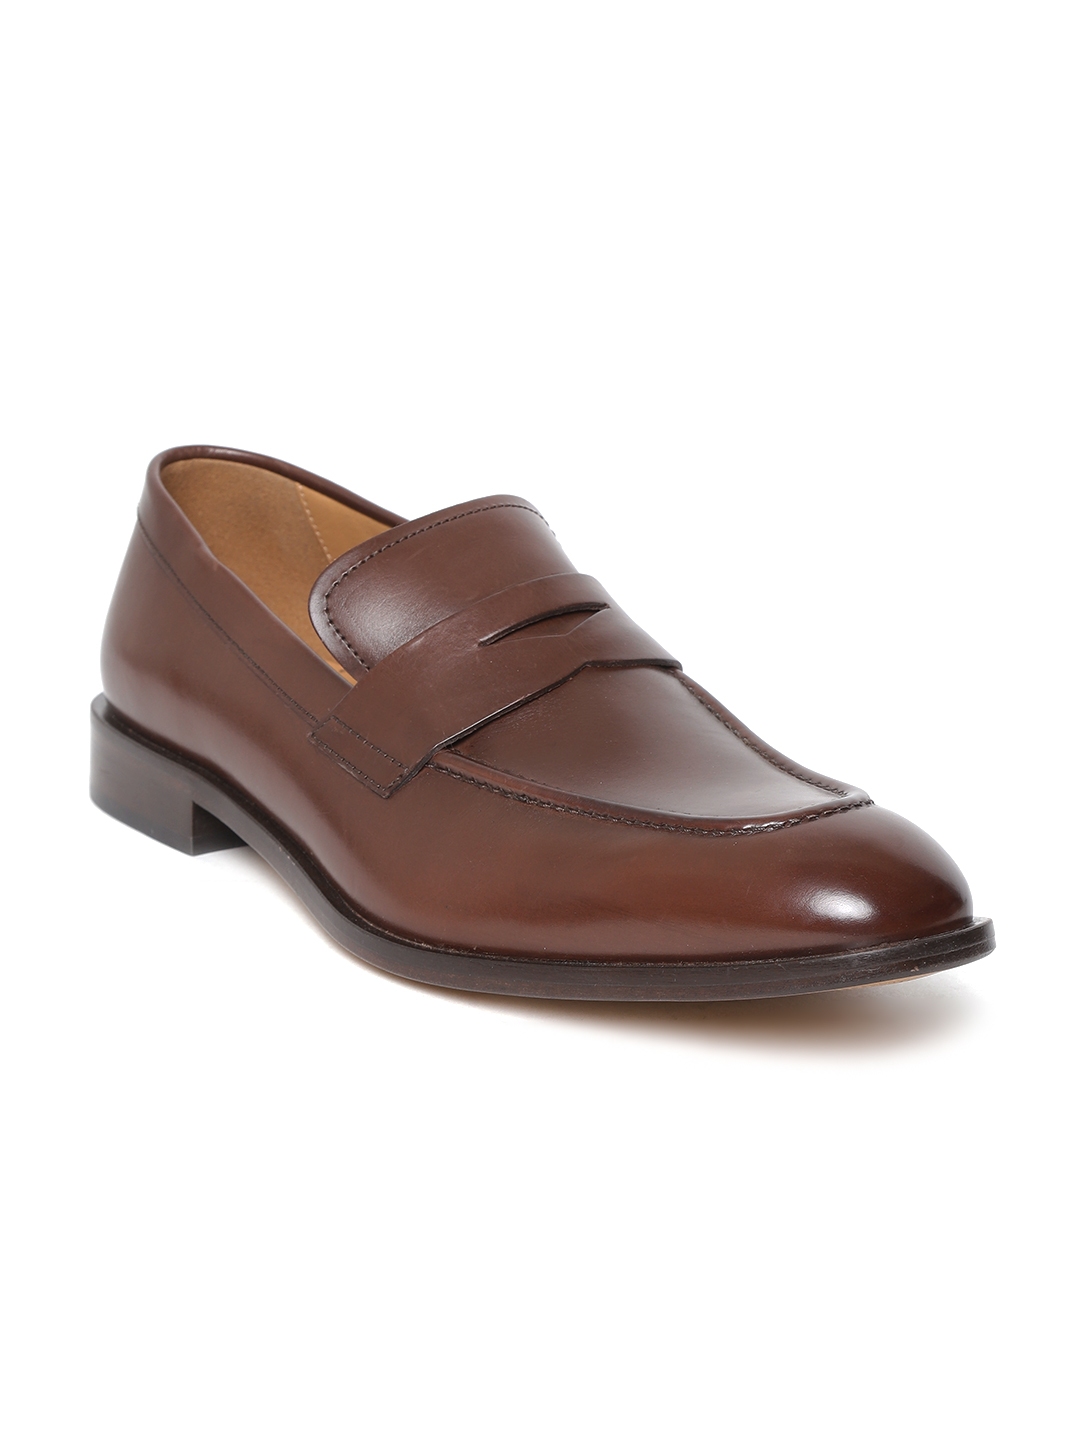 Buy Geox Men Brown Leather Formal Slip Ons - Formal Shoes for Men ...